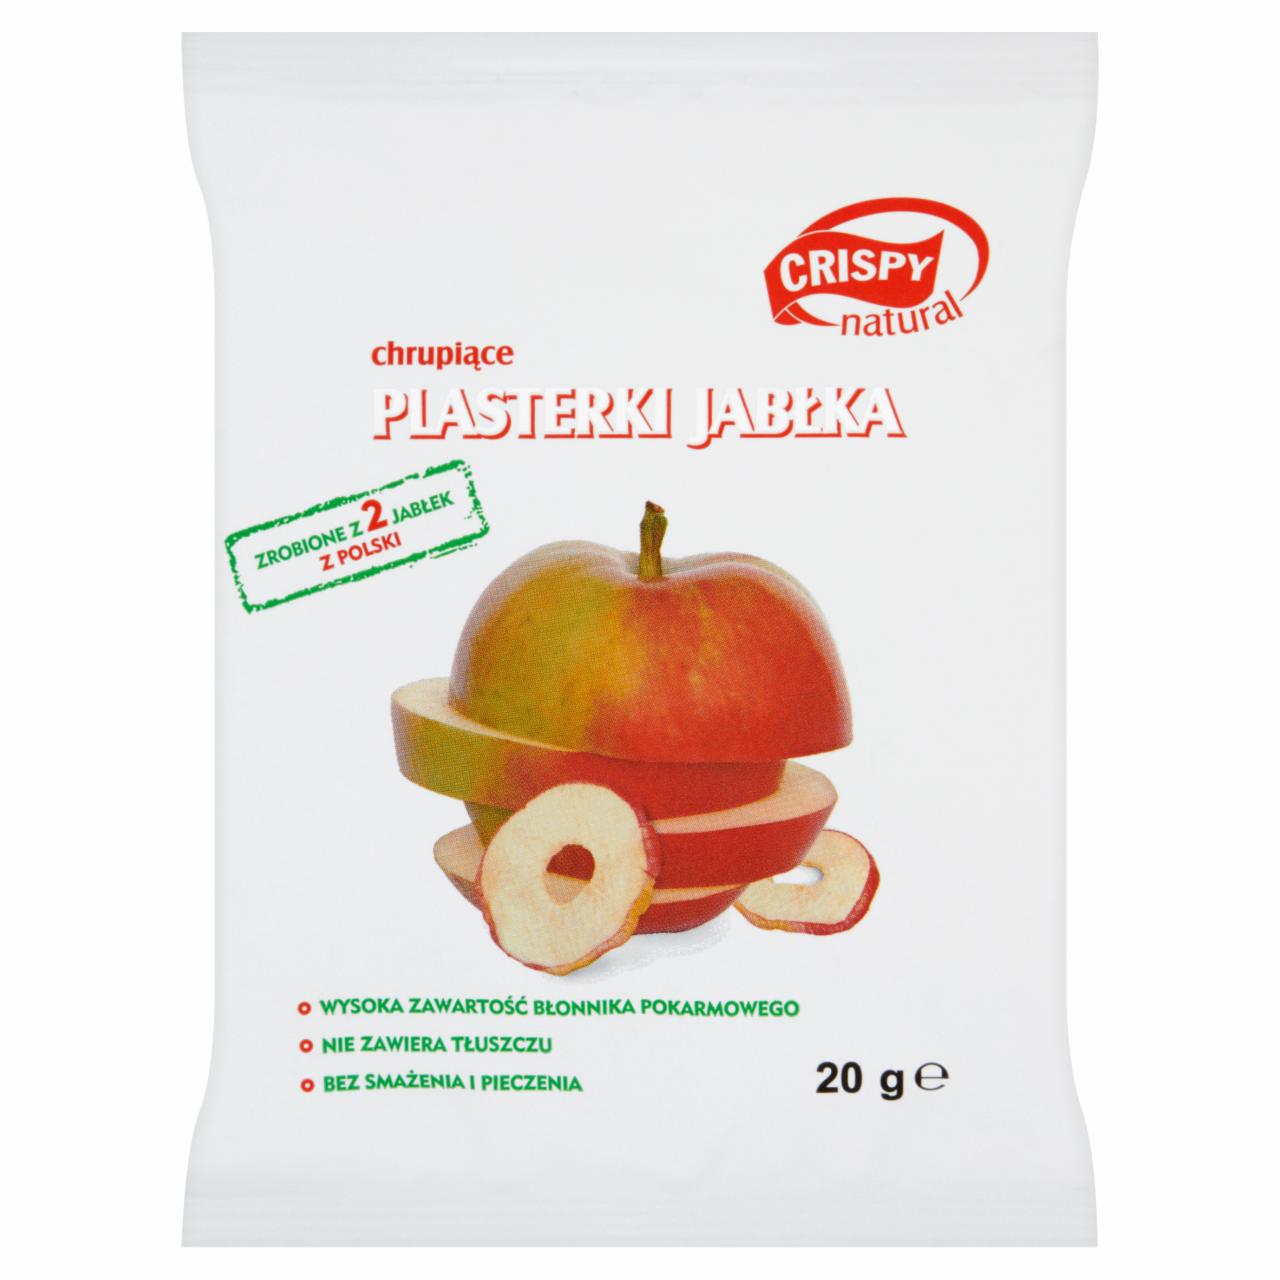 Zdjęcia - Crispy Natural Plasterki jabłka chrupiące 20 g